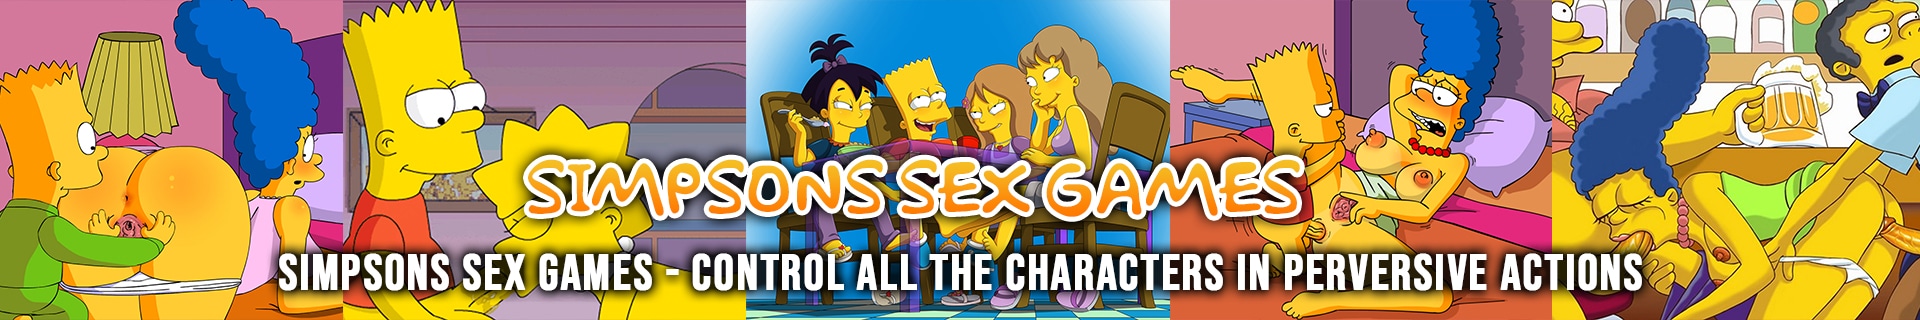 Simpsons porn games Kristen lanae porn